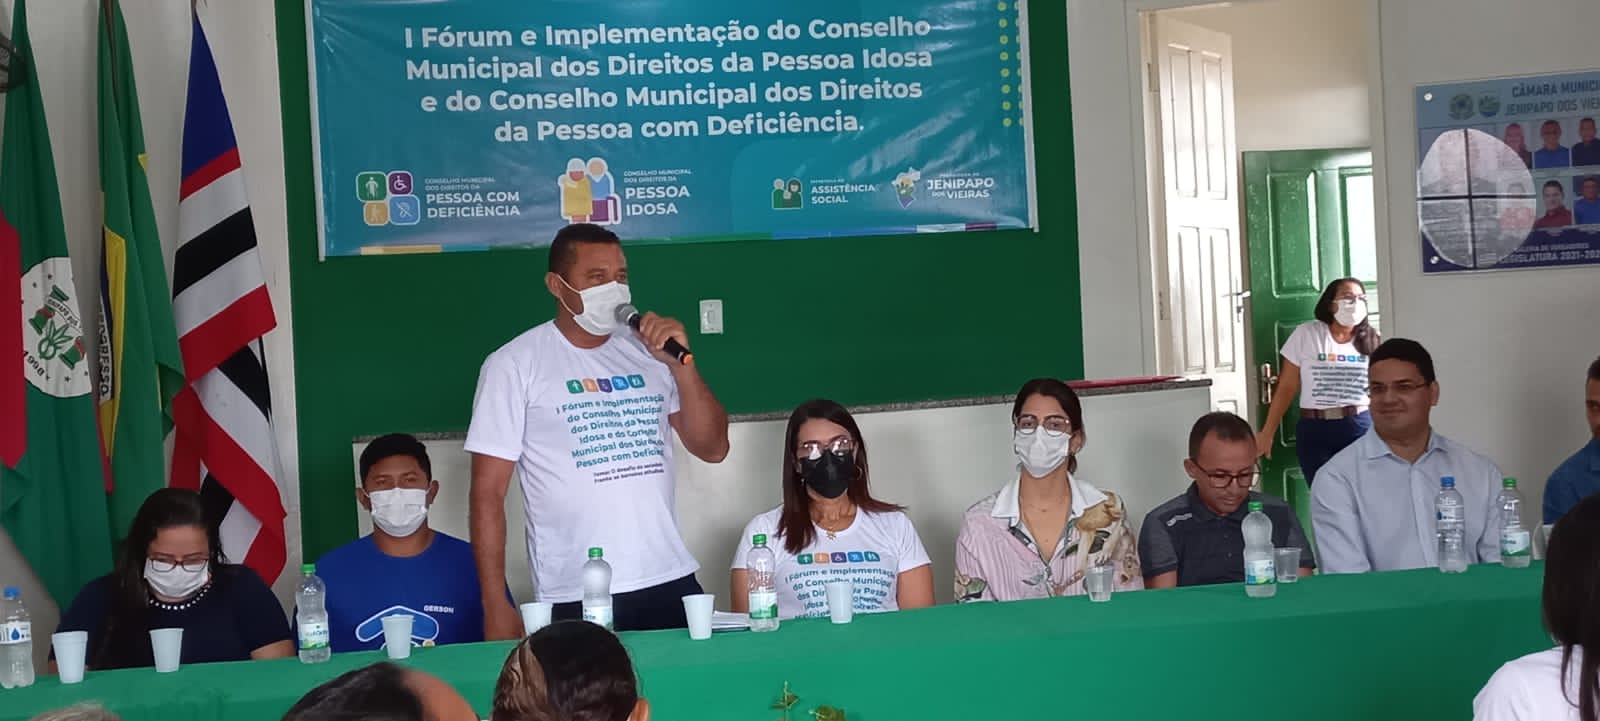 Prefeitura de Jenipapo dos Vieiras implementa dois importantes conselhos no município